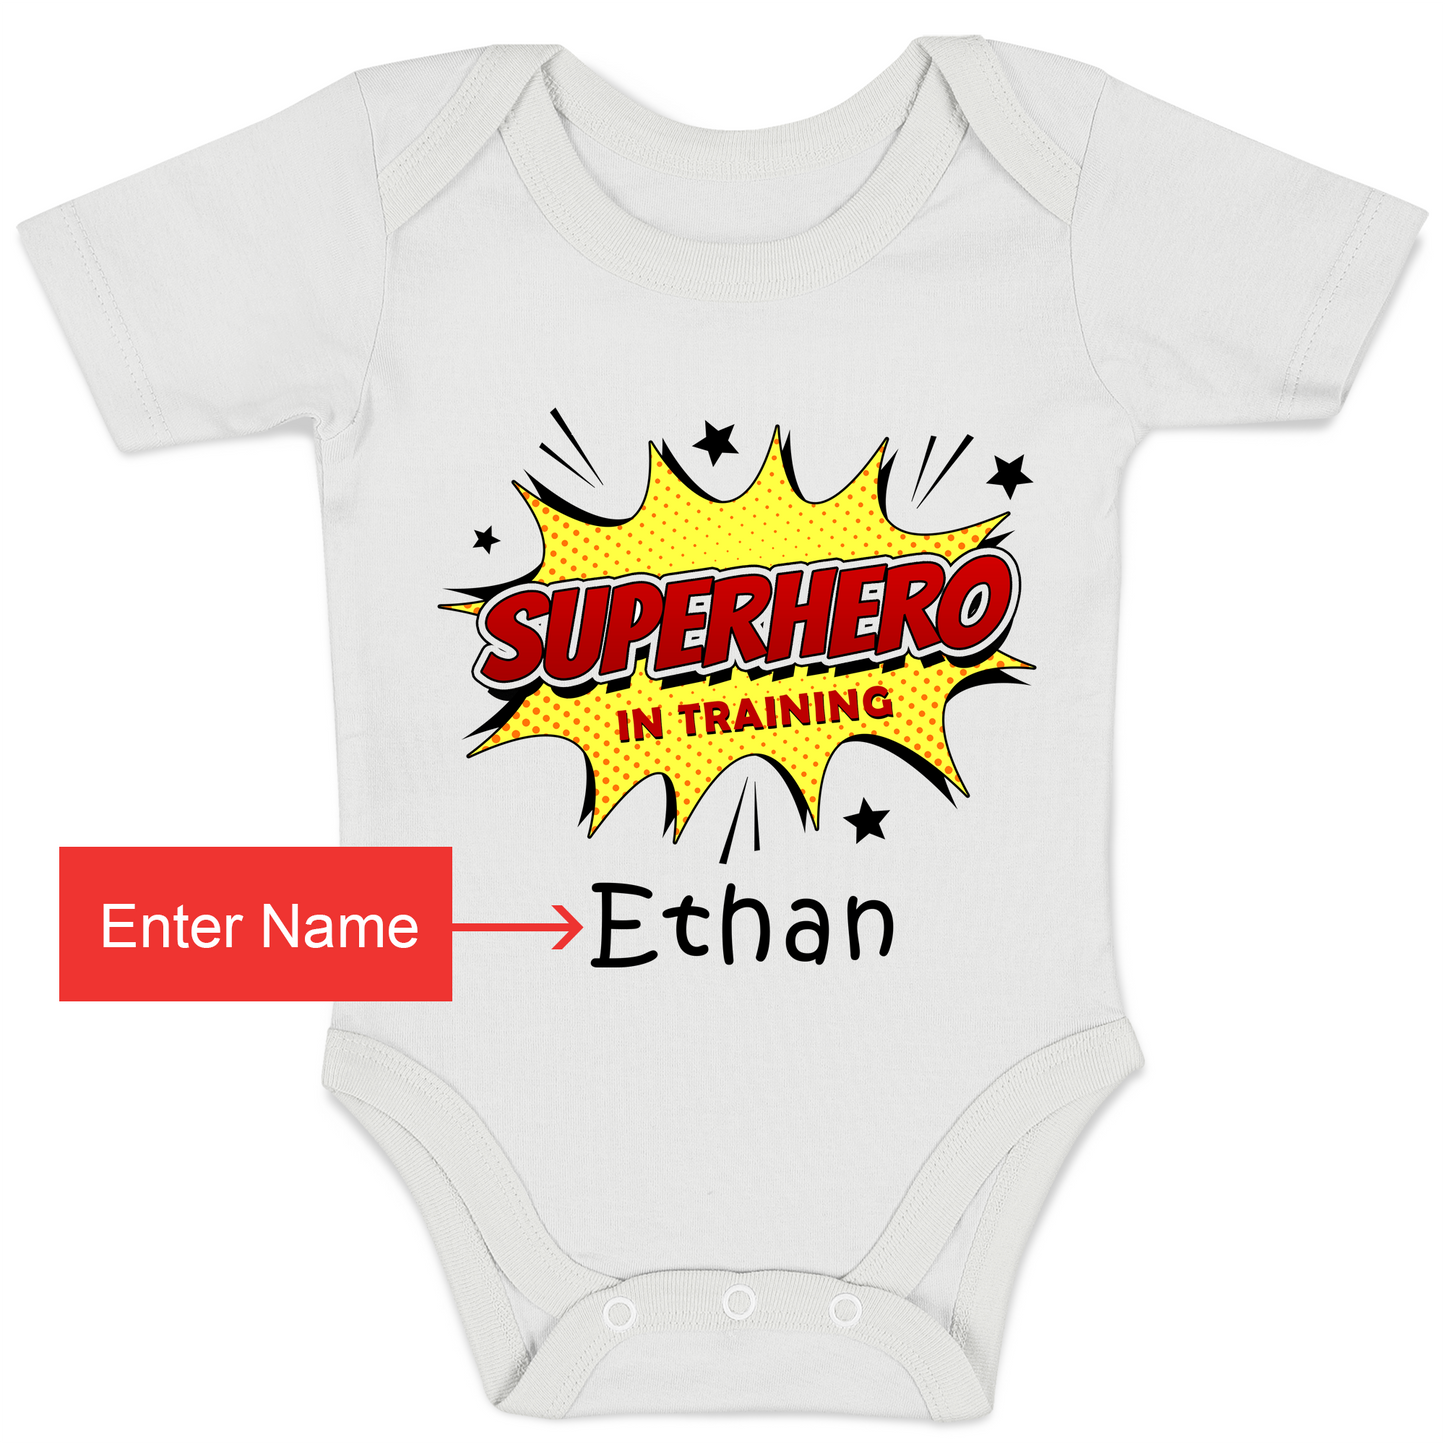 [Personalized] Endanzoo Organic Baby Bodysuit - Superhero in Training